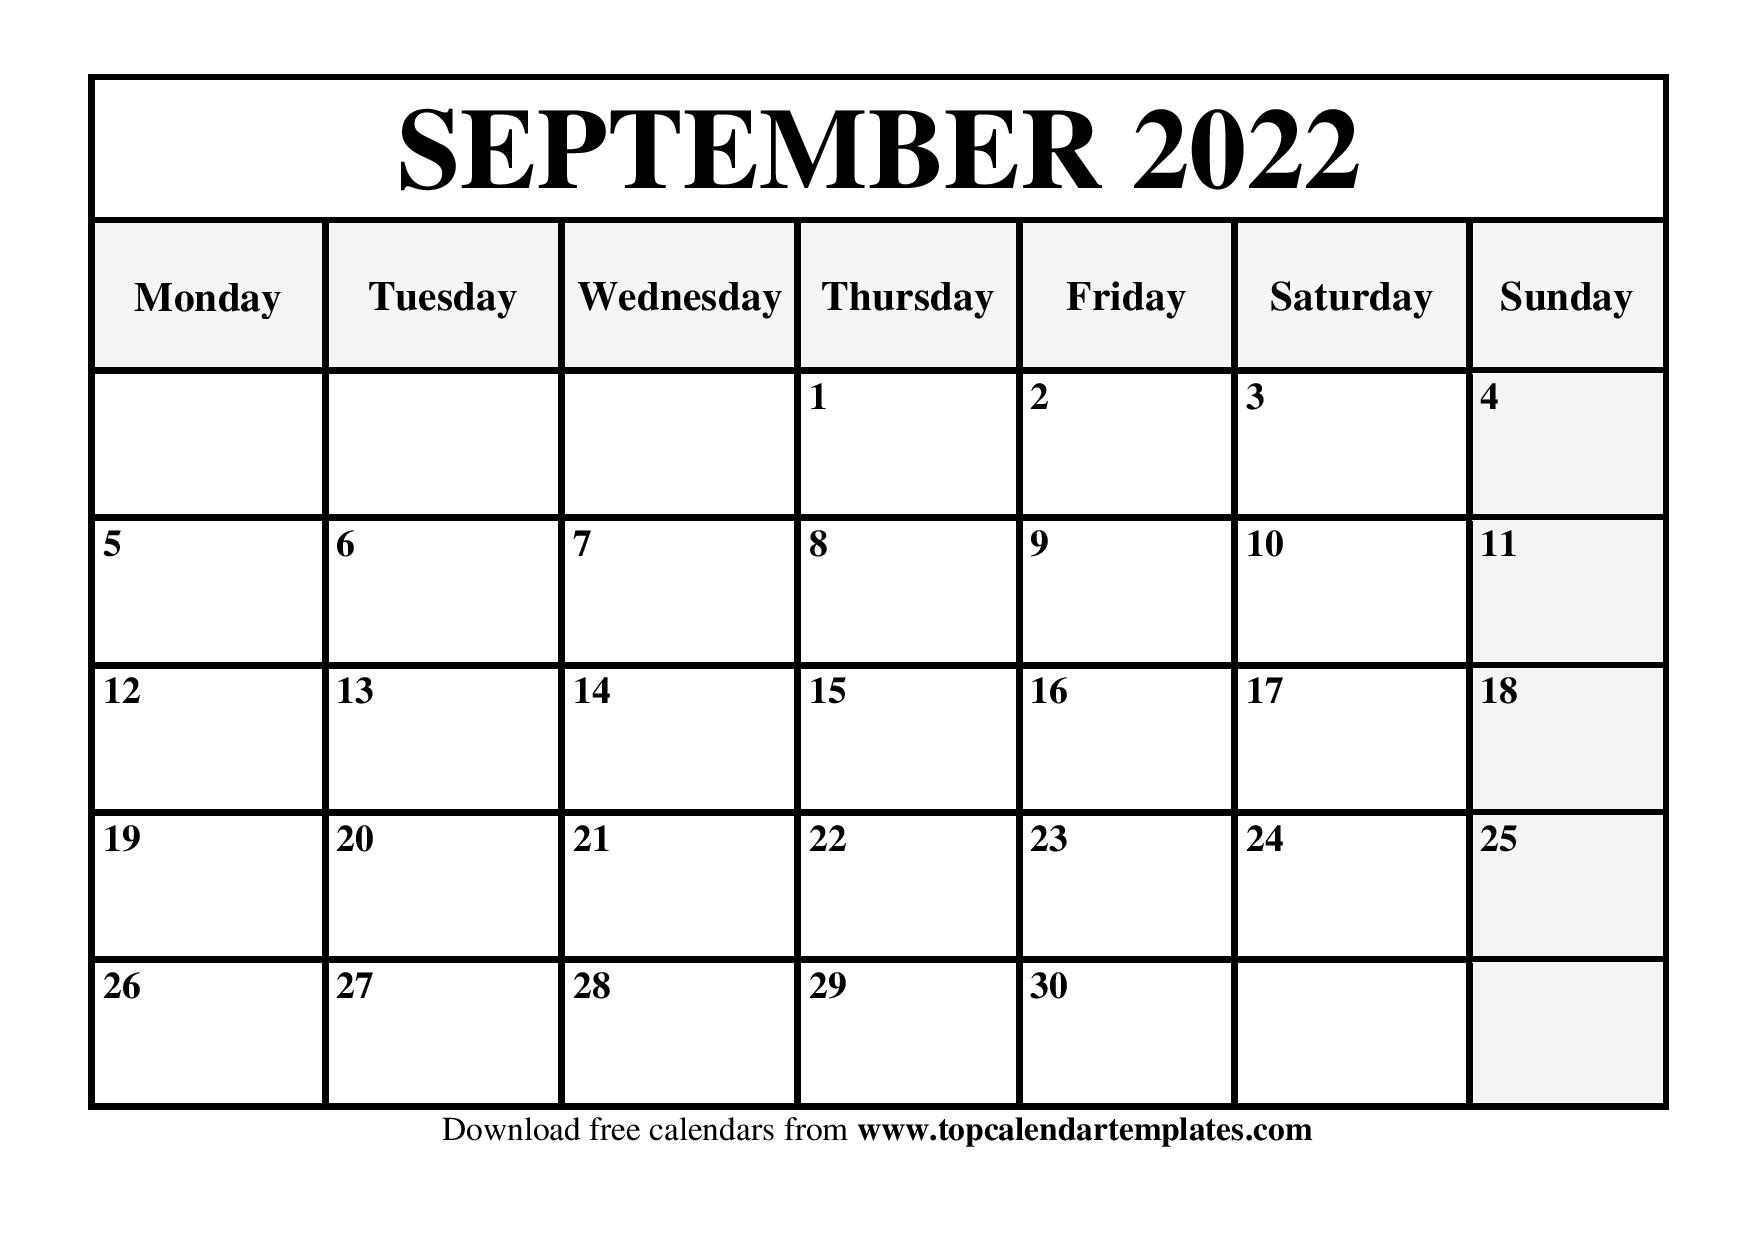 September 2022 Calendar Template Printable Calendar September 2022 Templates - Pdf, Word, Excel